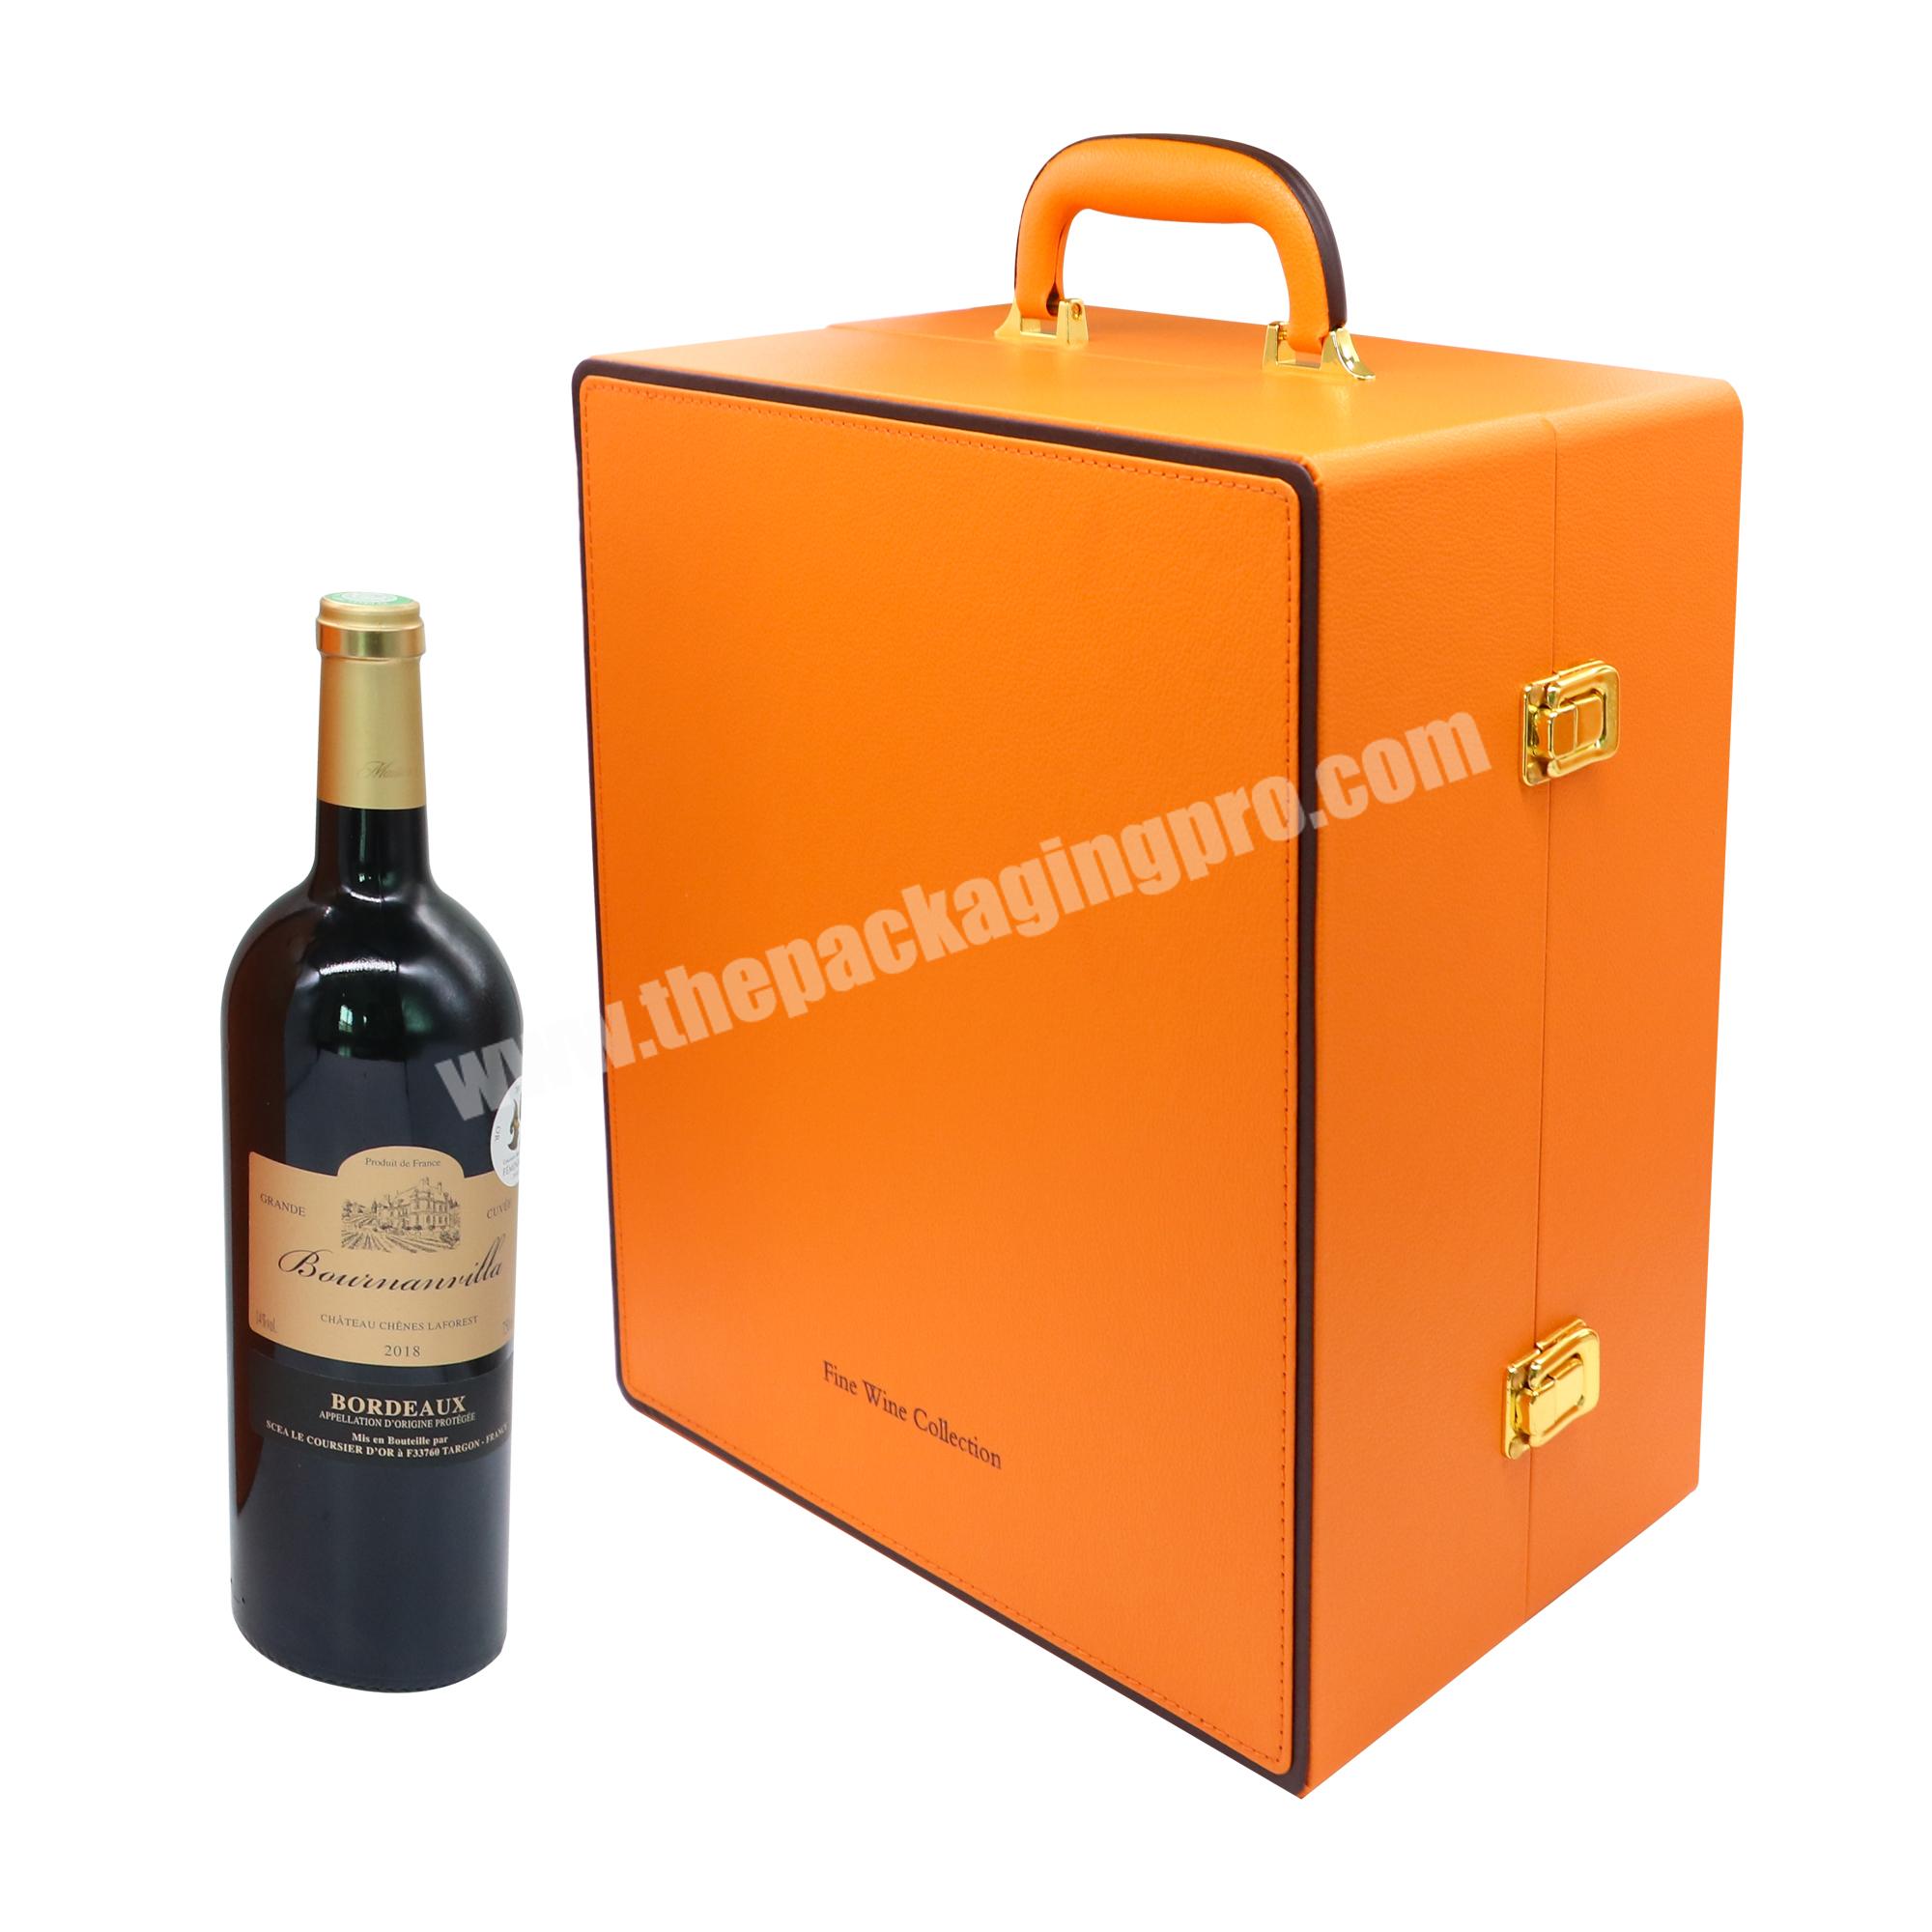 Low price 6 bottle wooden wine box wine gift set box wooden wine gift box